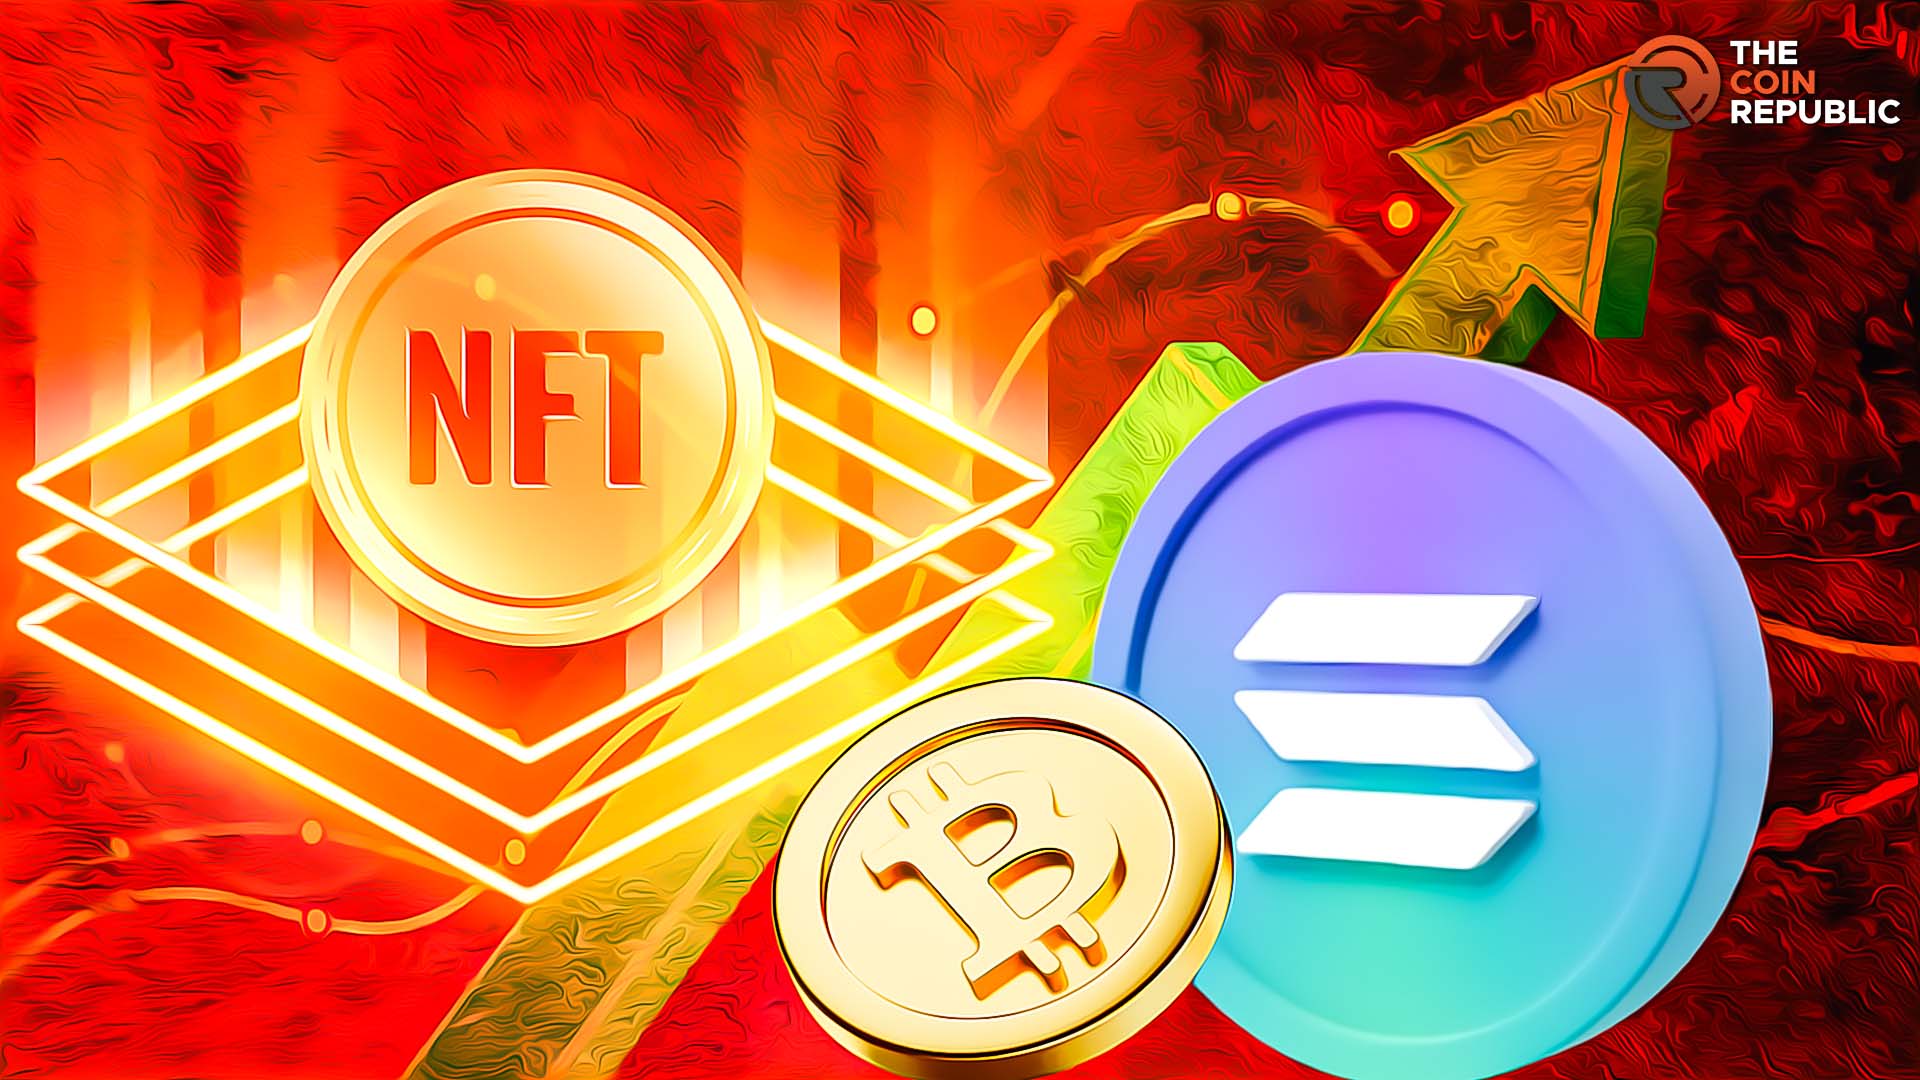 Bitcoin NFT Blockchain has second place defeating Solana